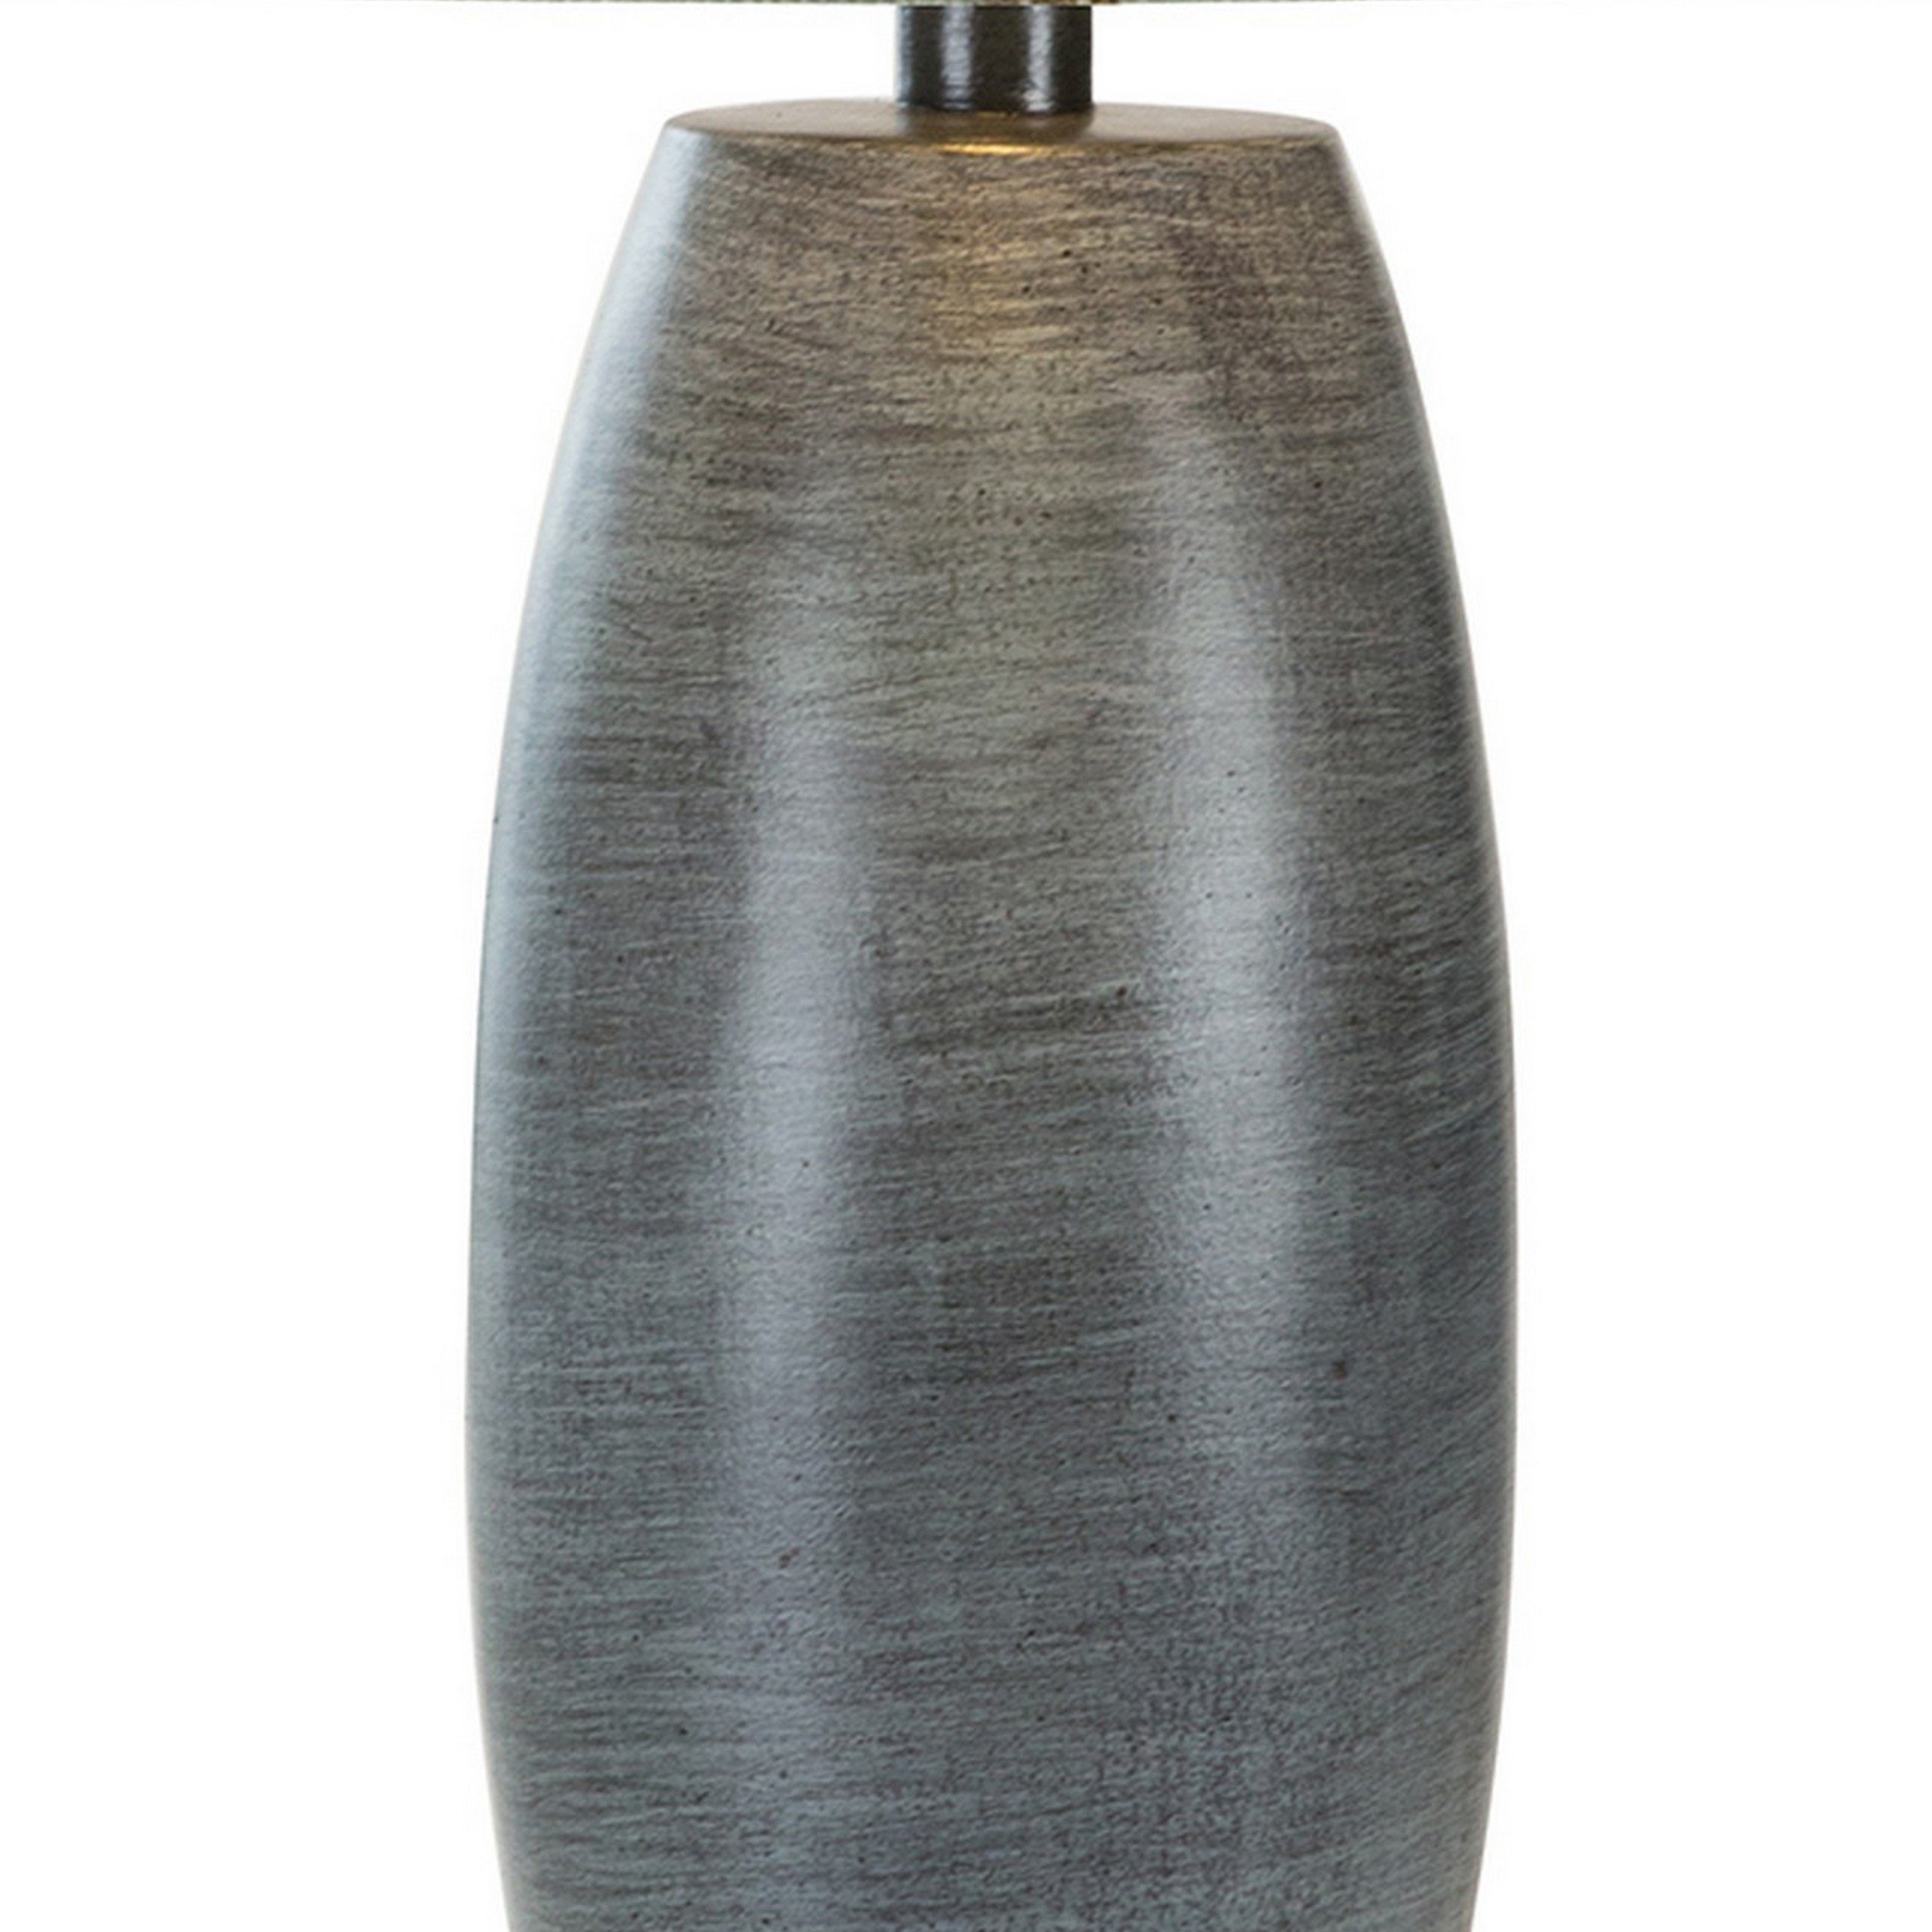 Ziya 30 Inch Table Lamp, Tall Pedestal Stand, Drum Shade, Stone Gray- Saltoro Sherpi